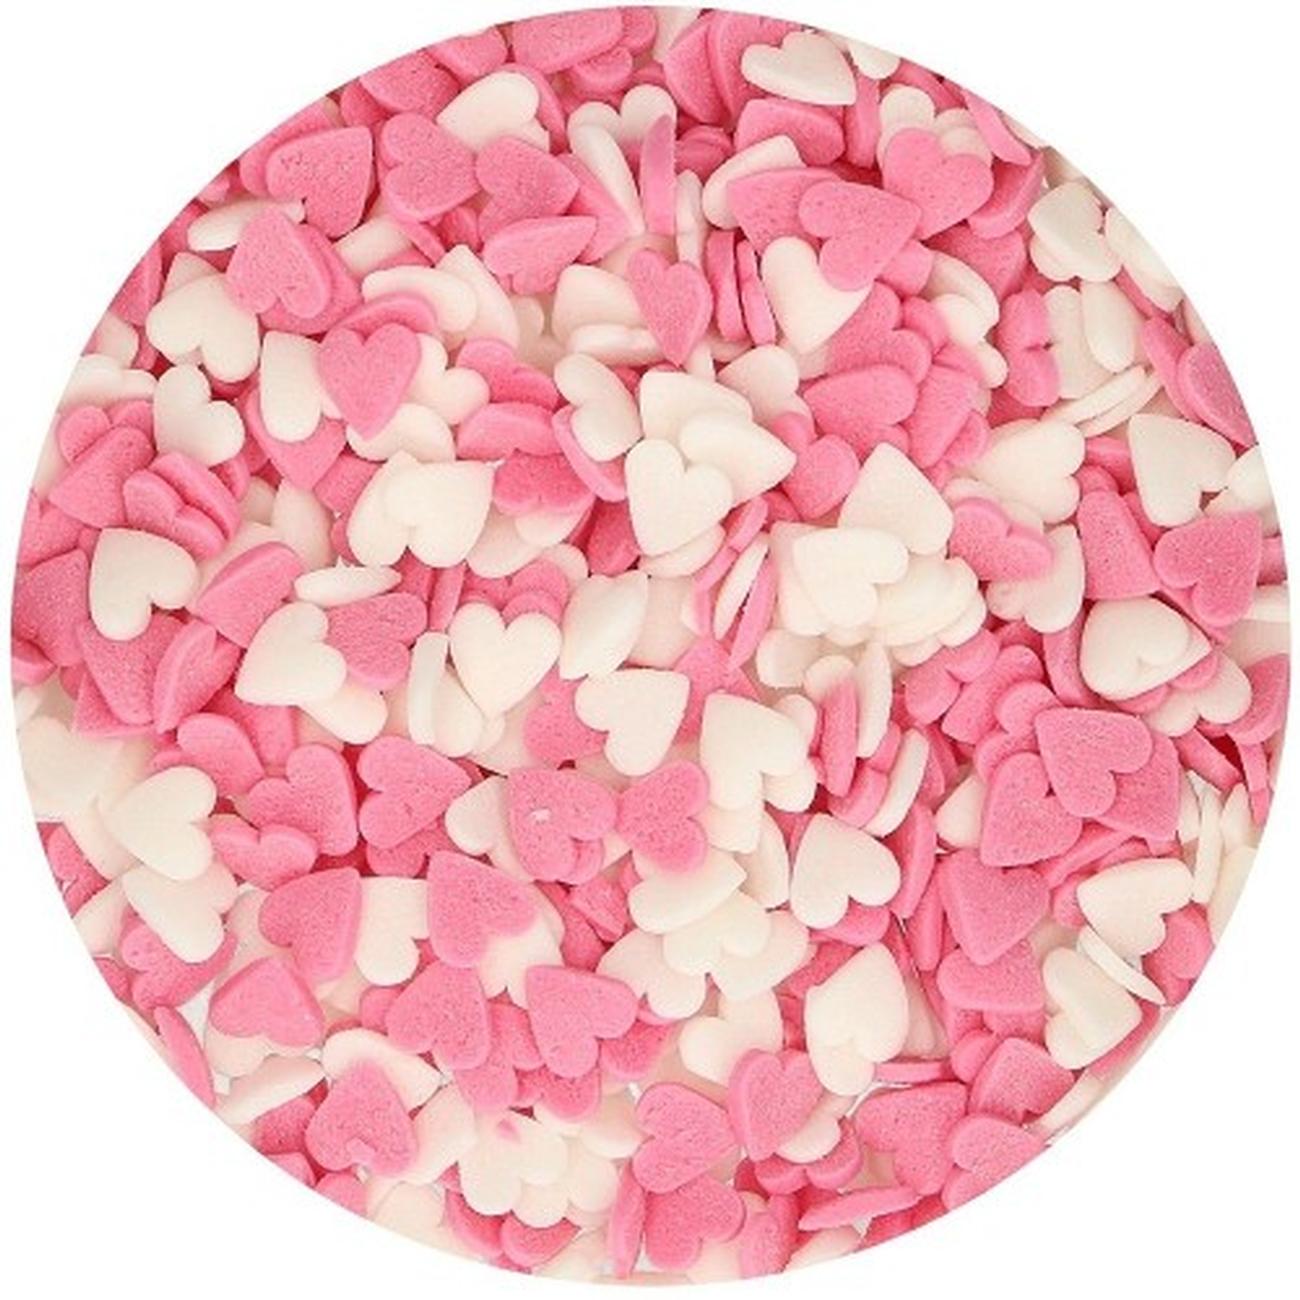 funcakes-hearts-pink-white-60g - FunCakes Hearts Pink-White 60 g